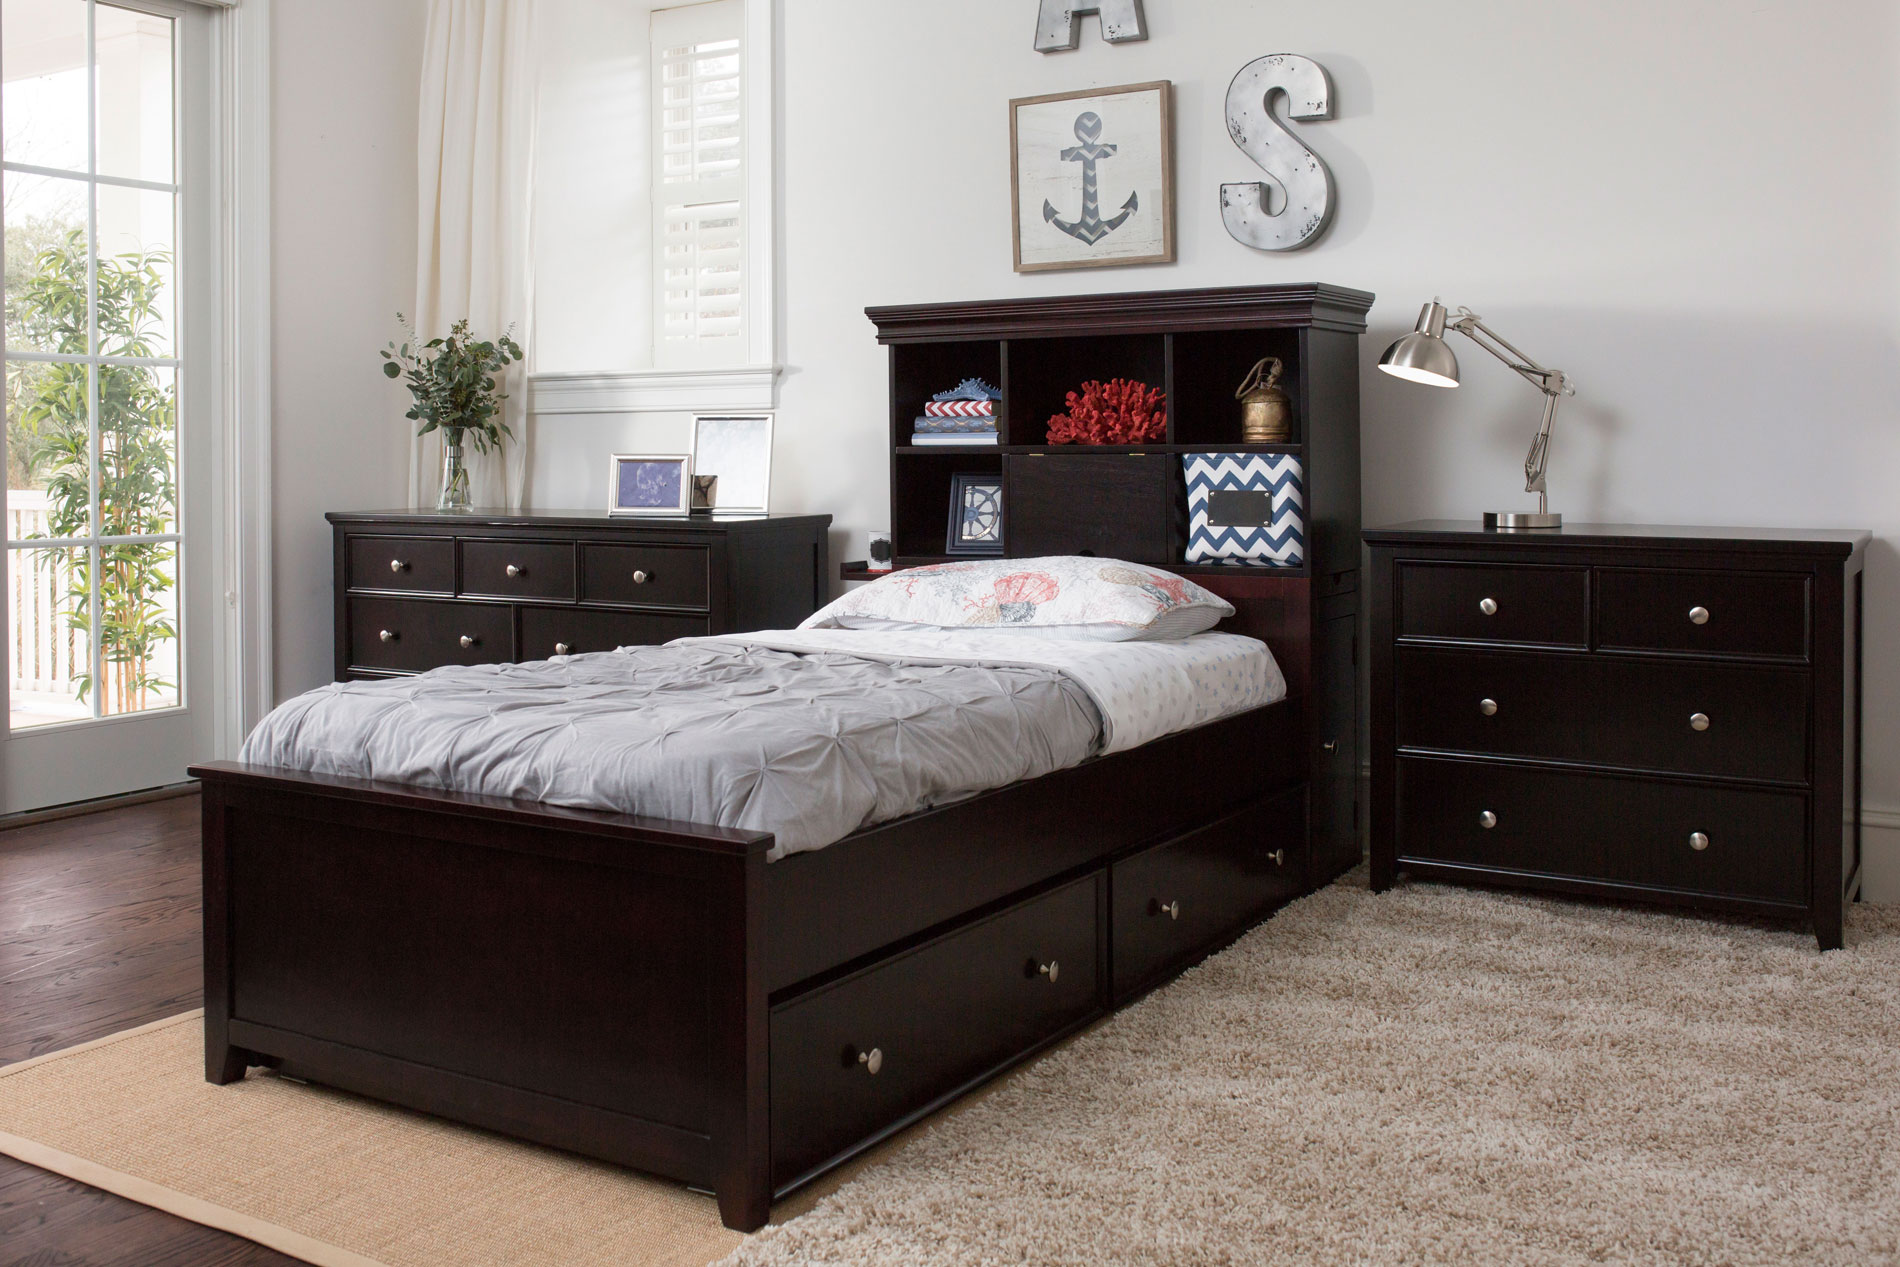 teenage bedroom furniture set with desks